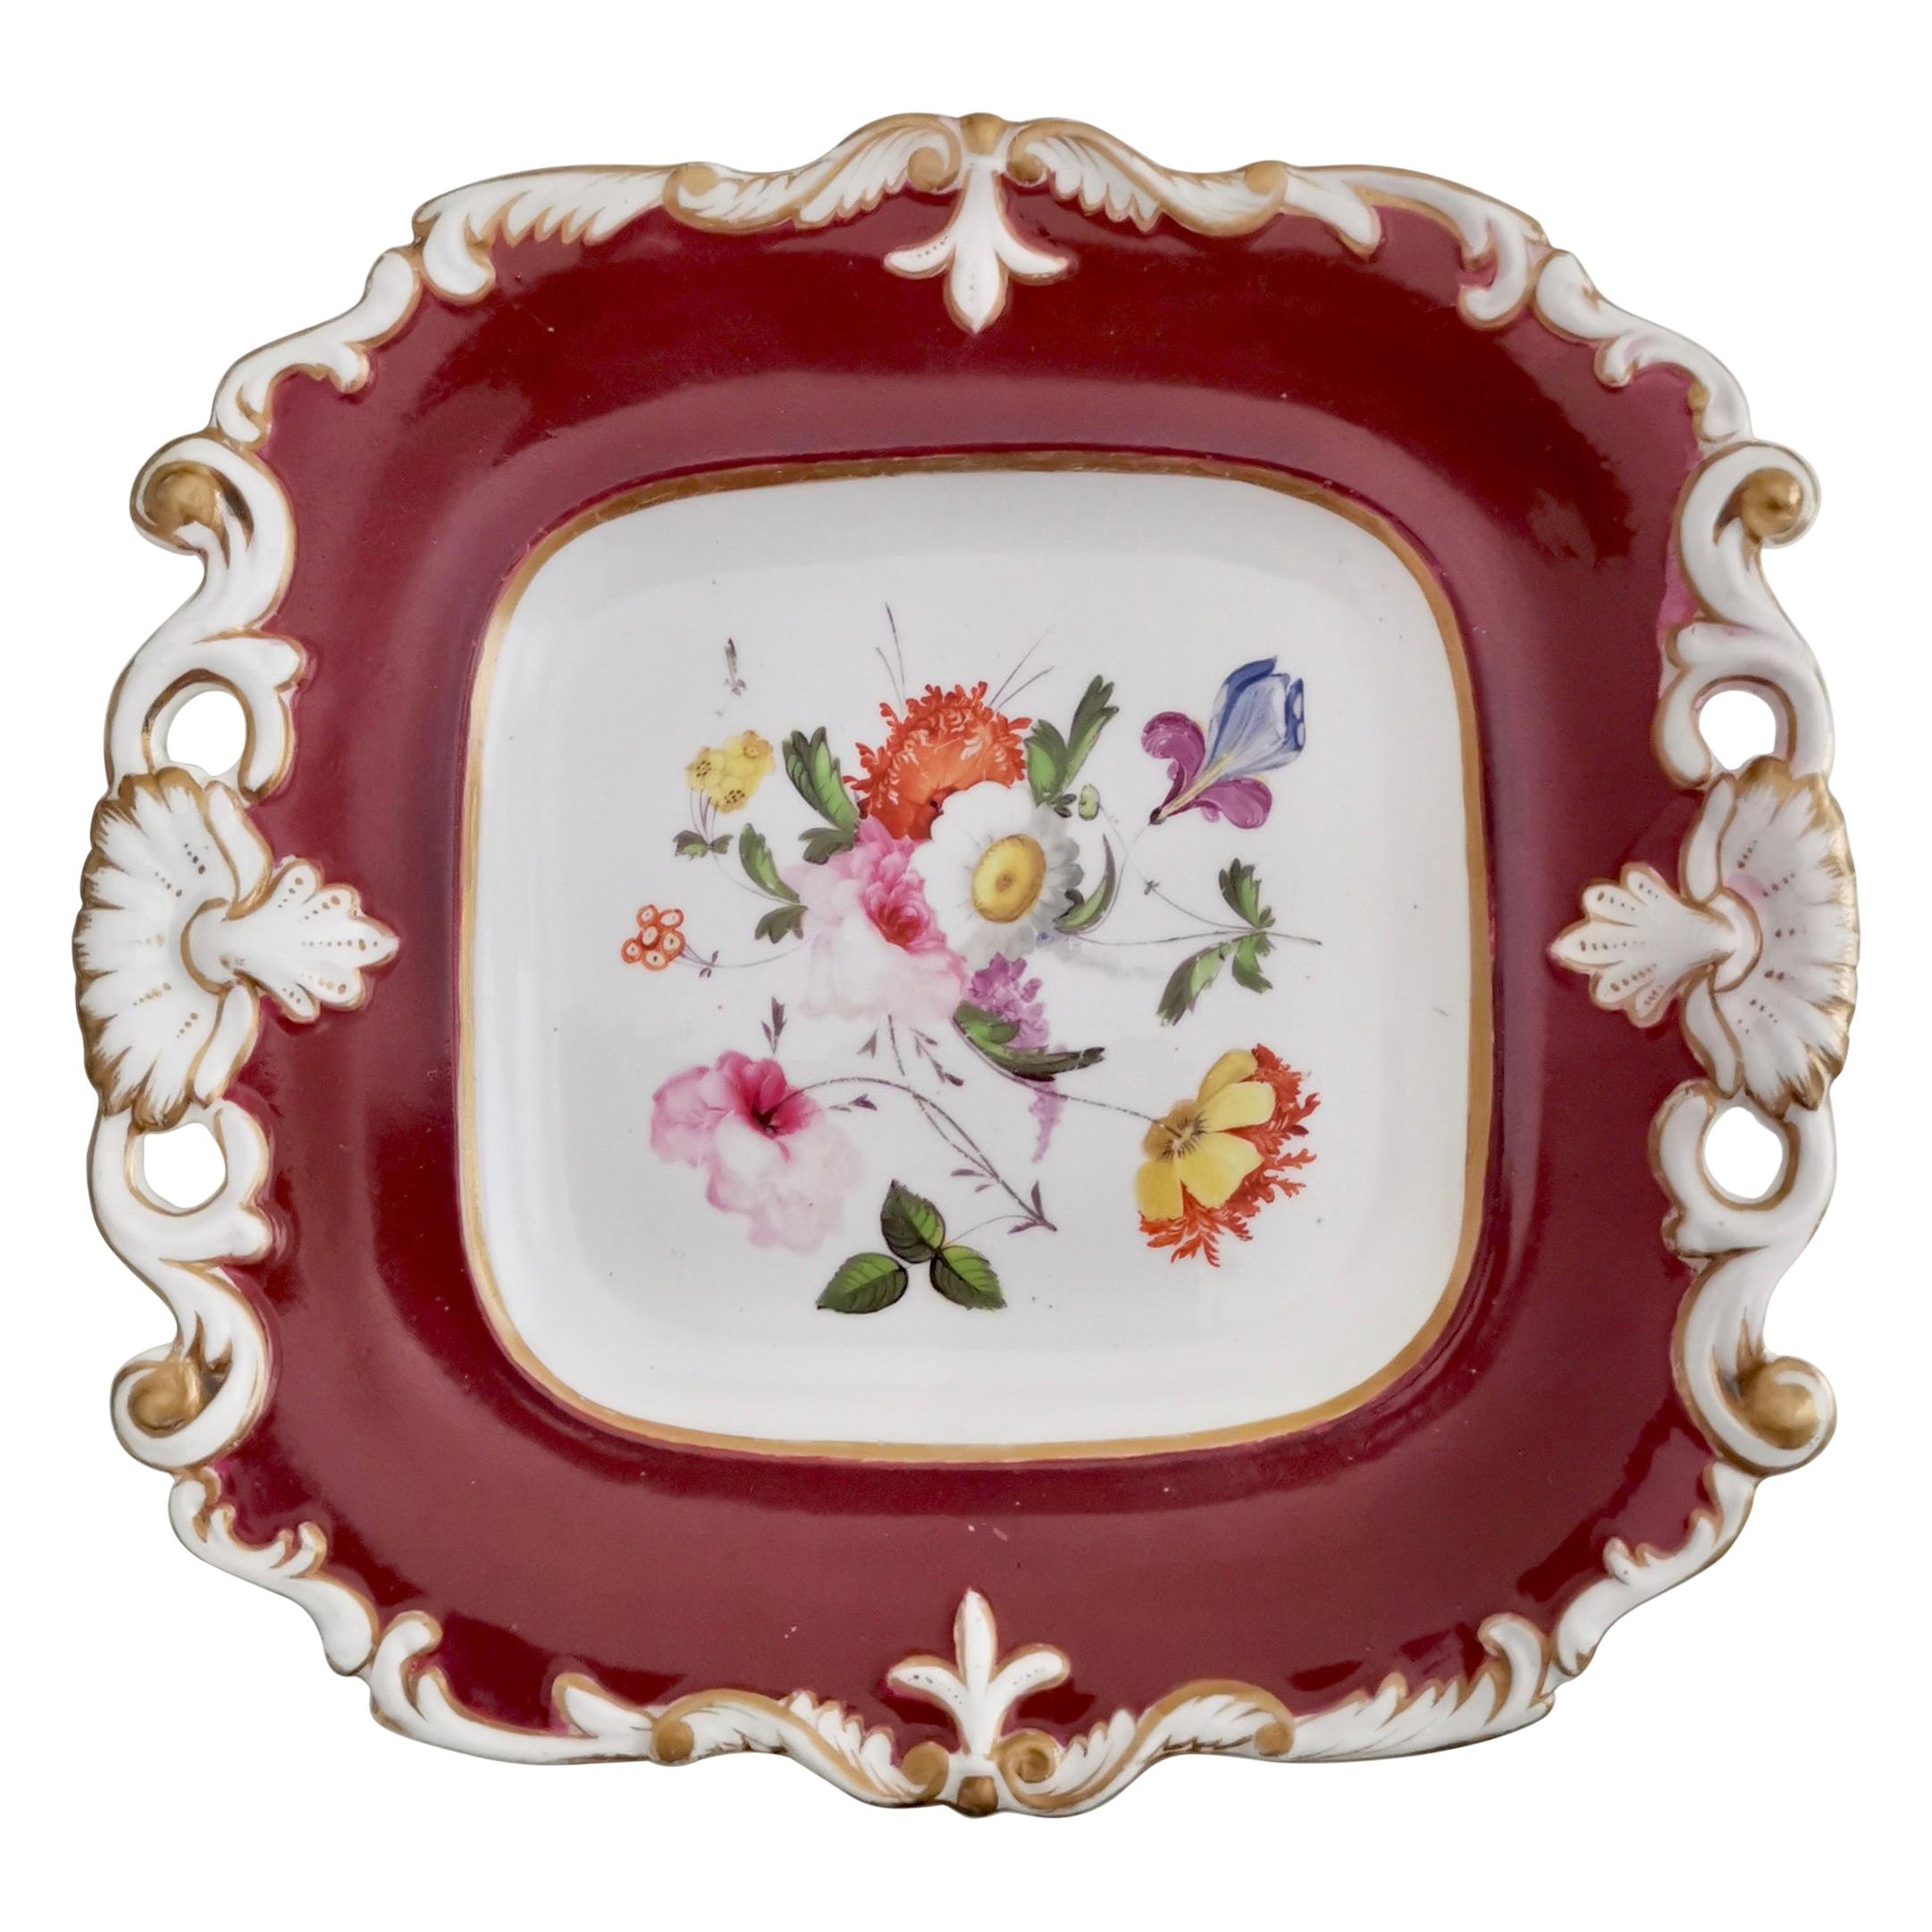 Samuel Alcock Porcelain Plate, Maroon with Flowers, Regency, ca 1825